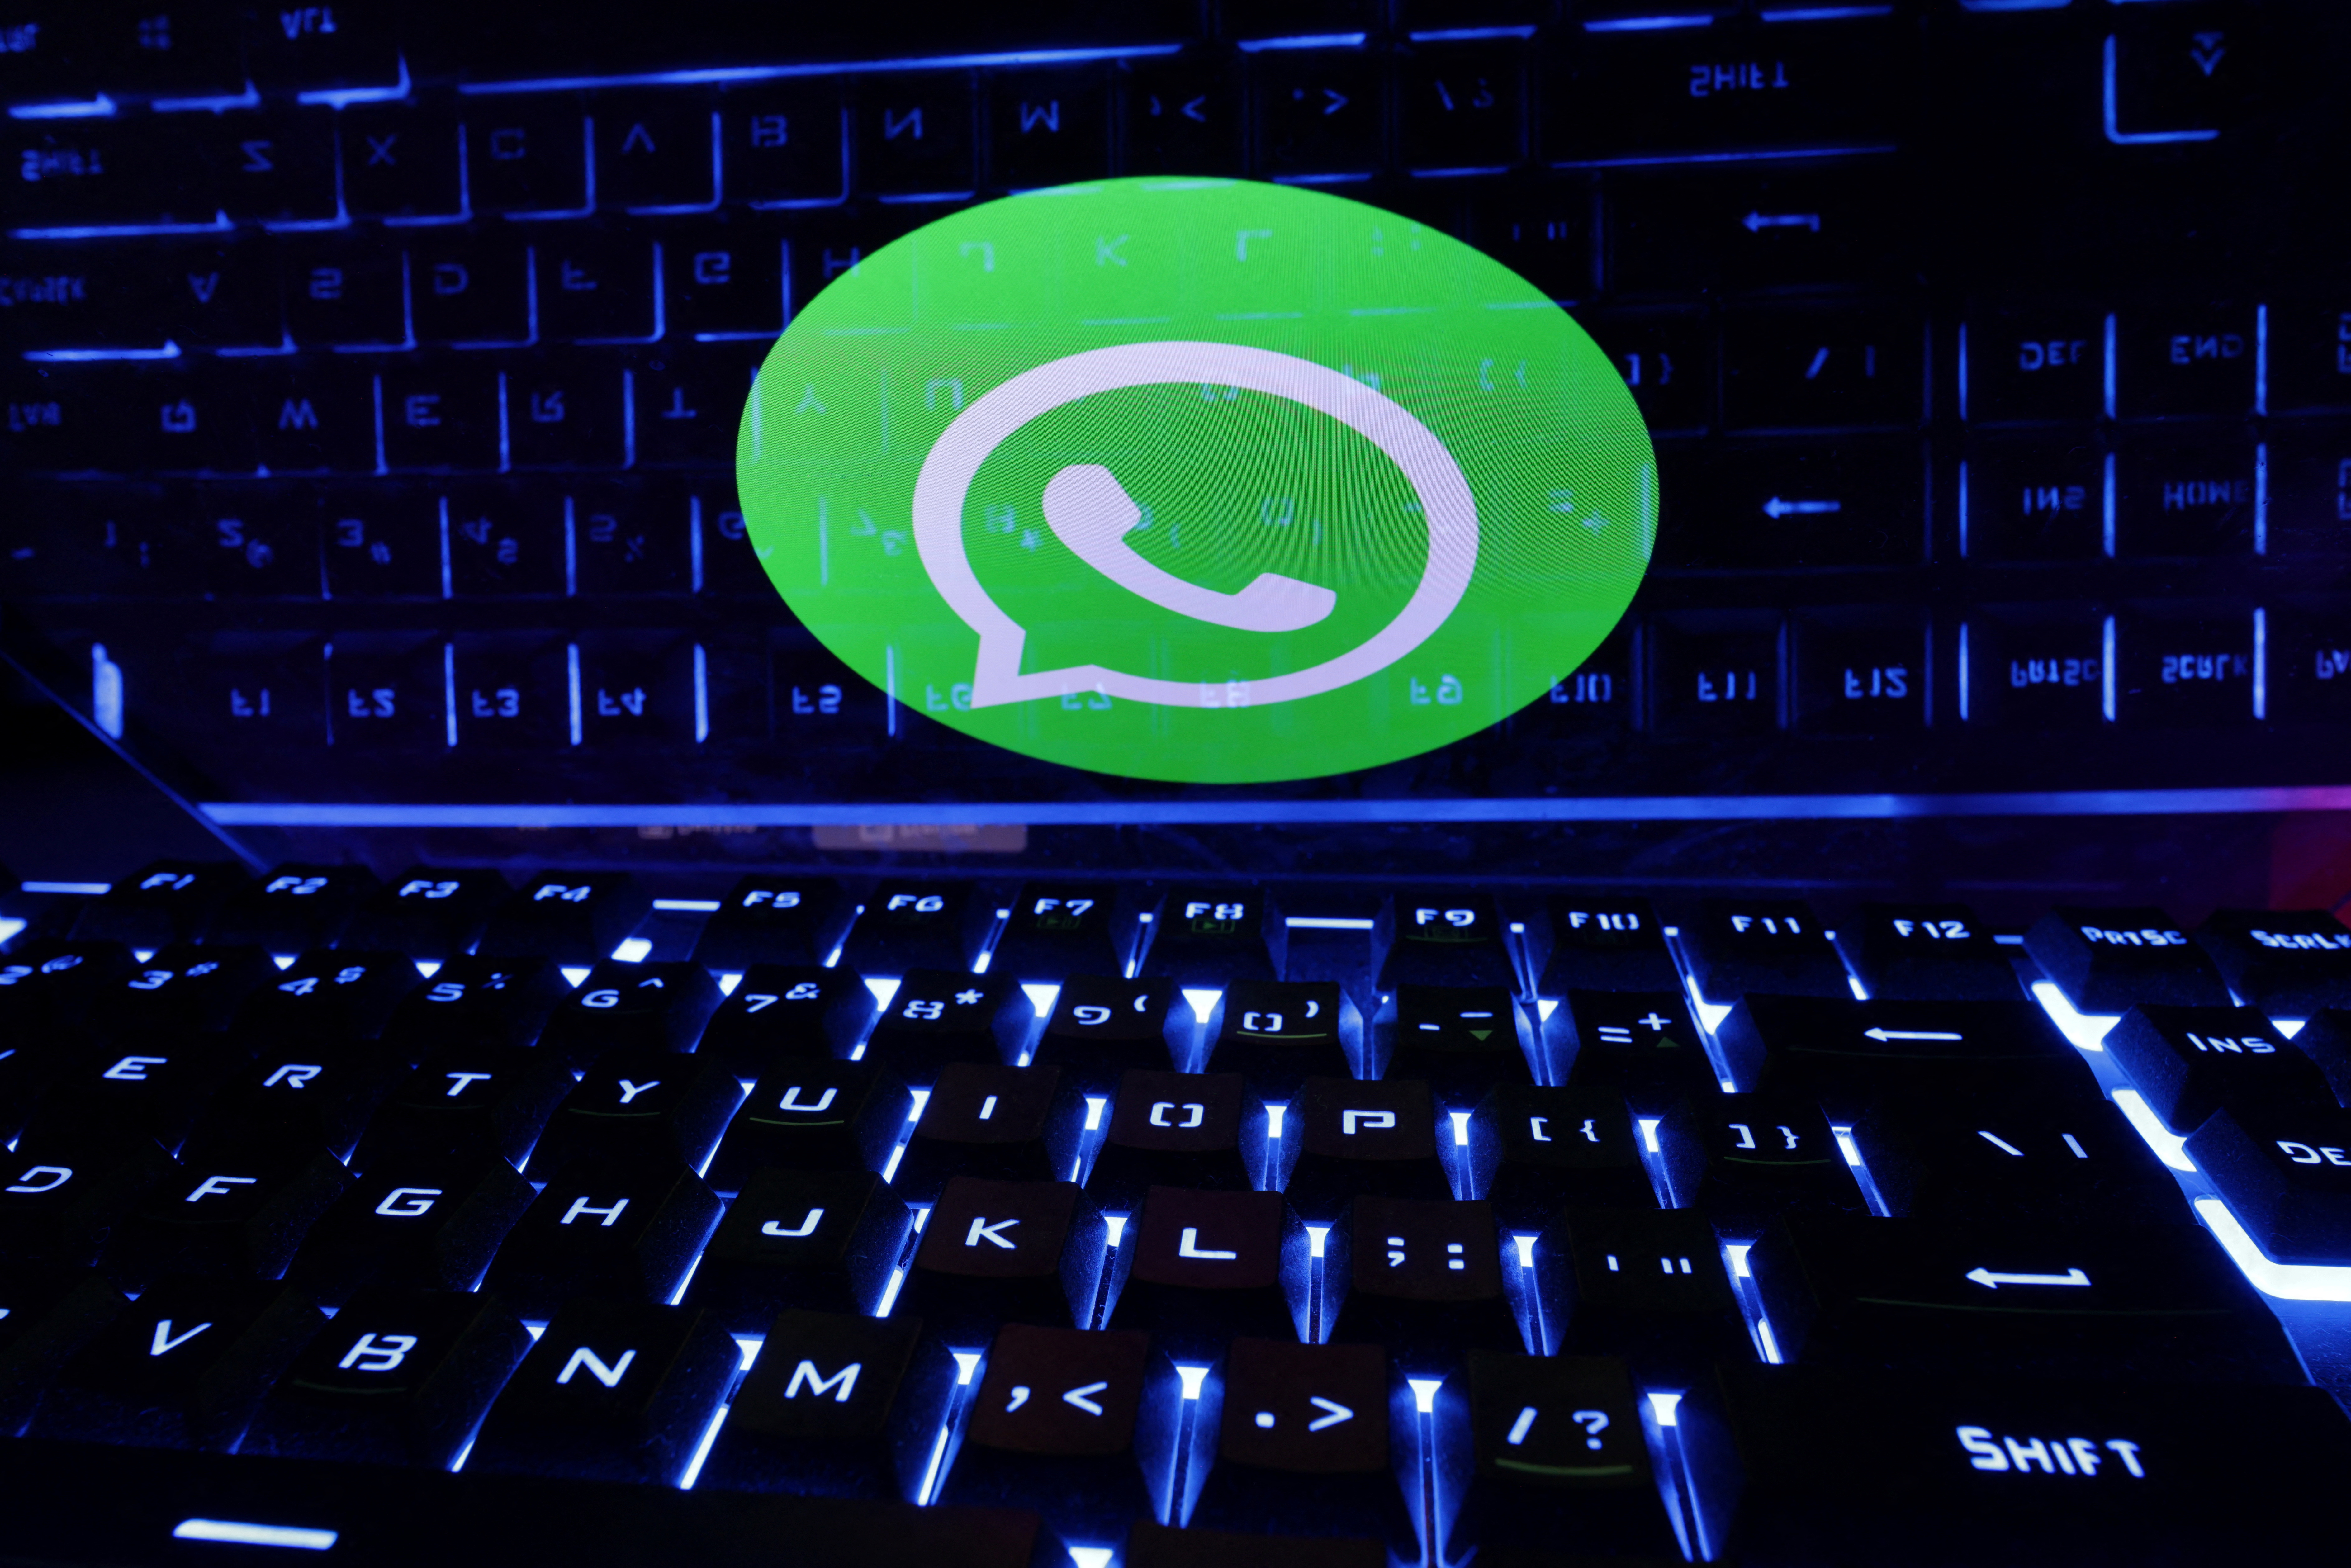 Illustration shows Whatsapp logo